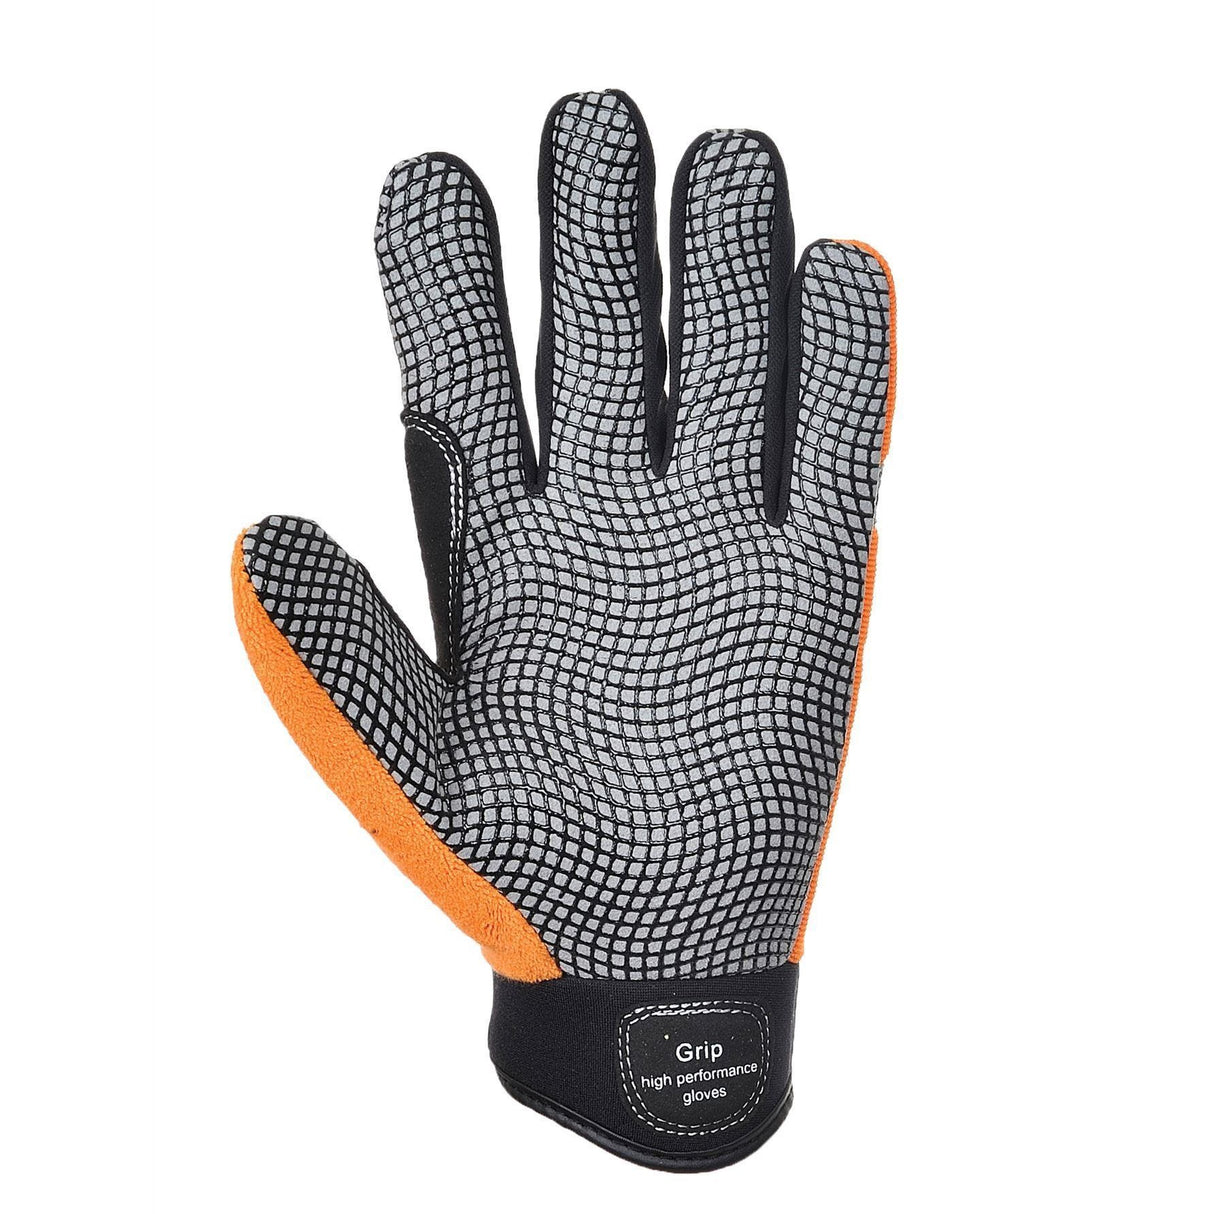 Portwest Comfort Grip - High Performance Glove